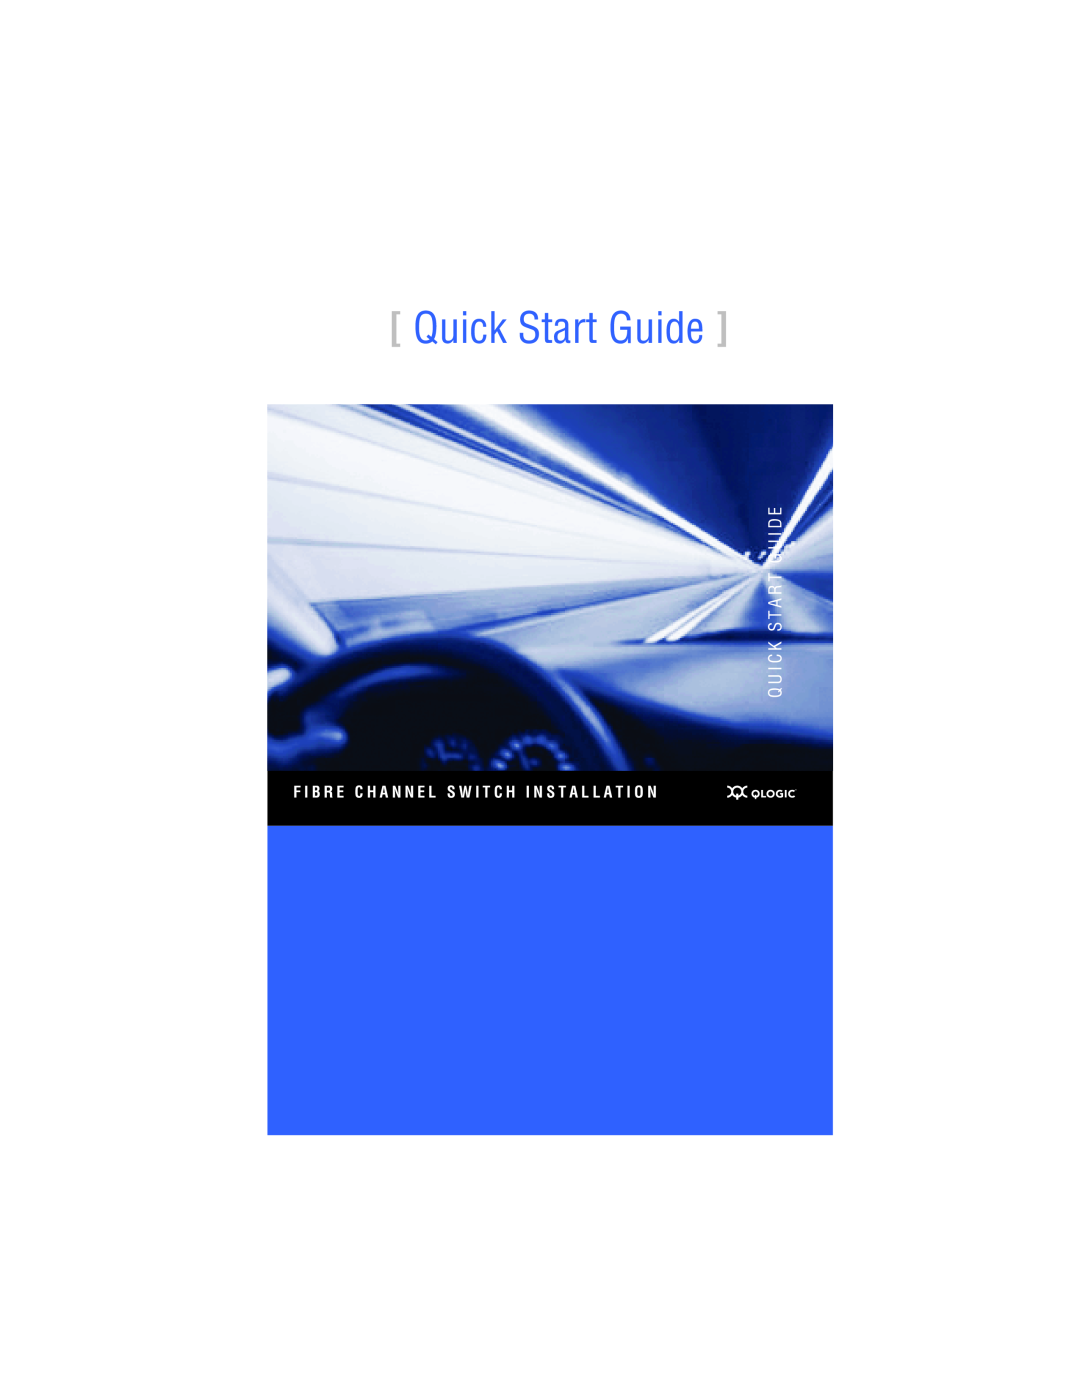 Q-Logic 5800 quick start Quick Start Guide, Q U I C K S T A R T G U I D E 